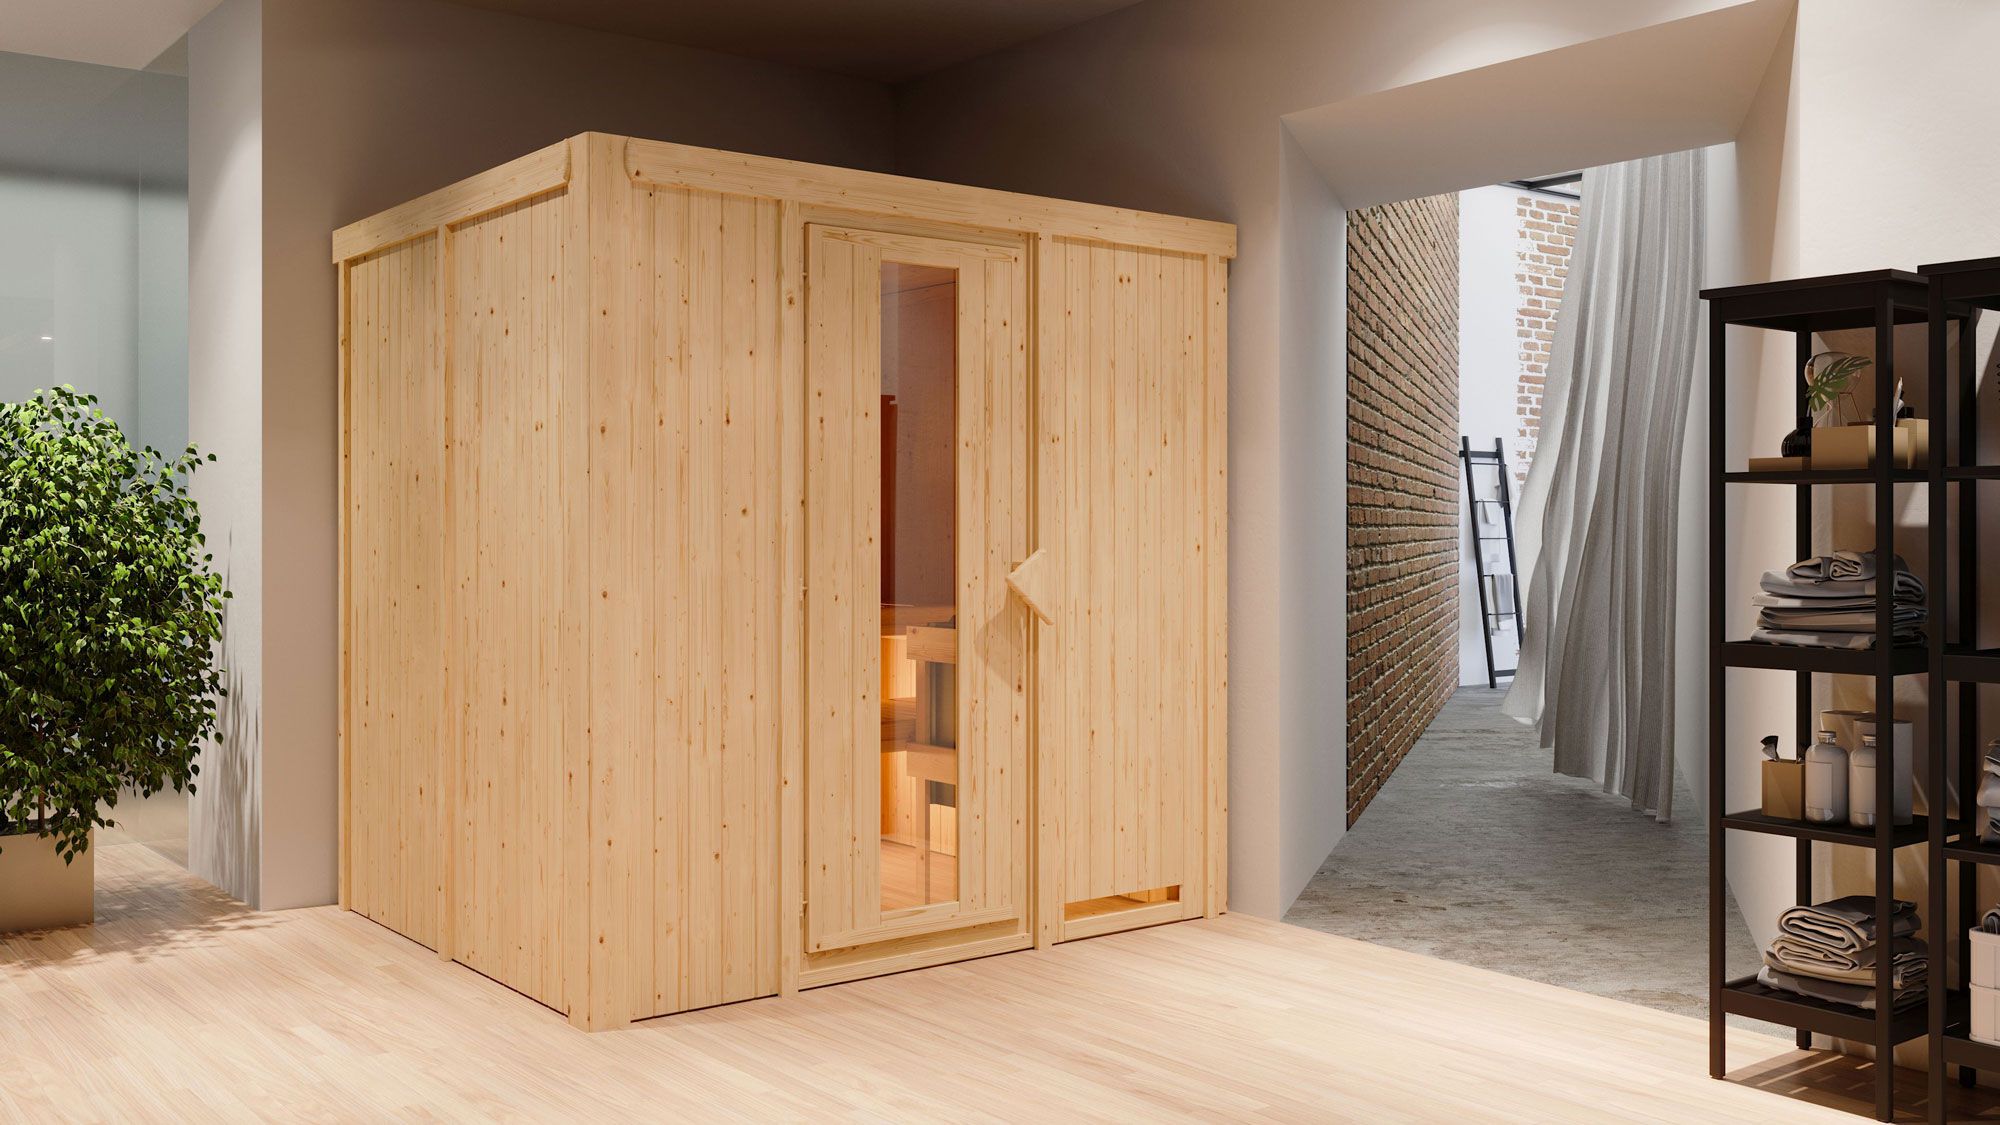 SET-sauna "Eemil" met energiebesparende deur - kleur: naturel, BIO 9 kW kachel - 196 x 170 x 198 cm (B x D x H)